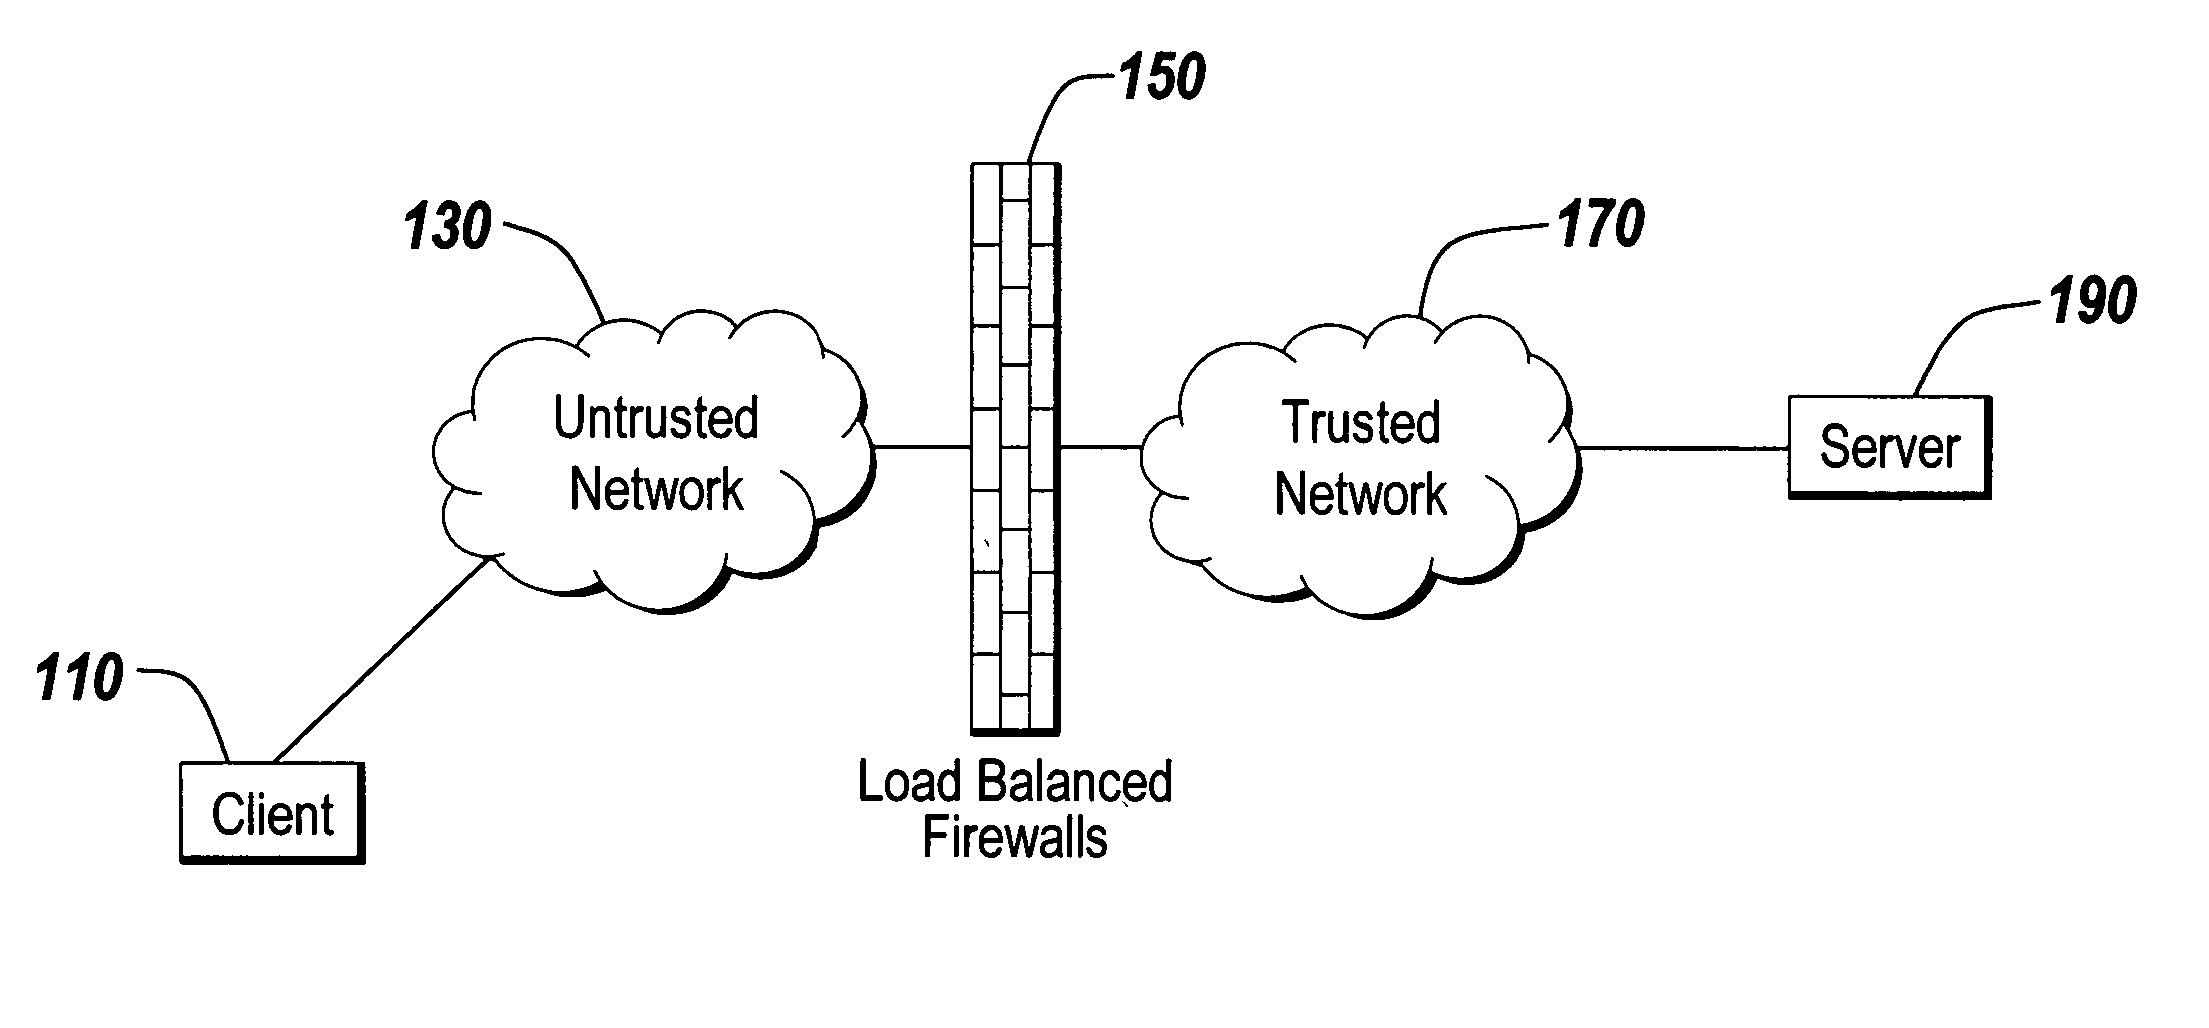 Firewall load balancing using a single physical device